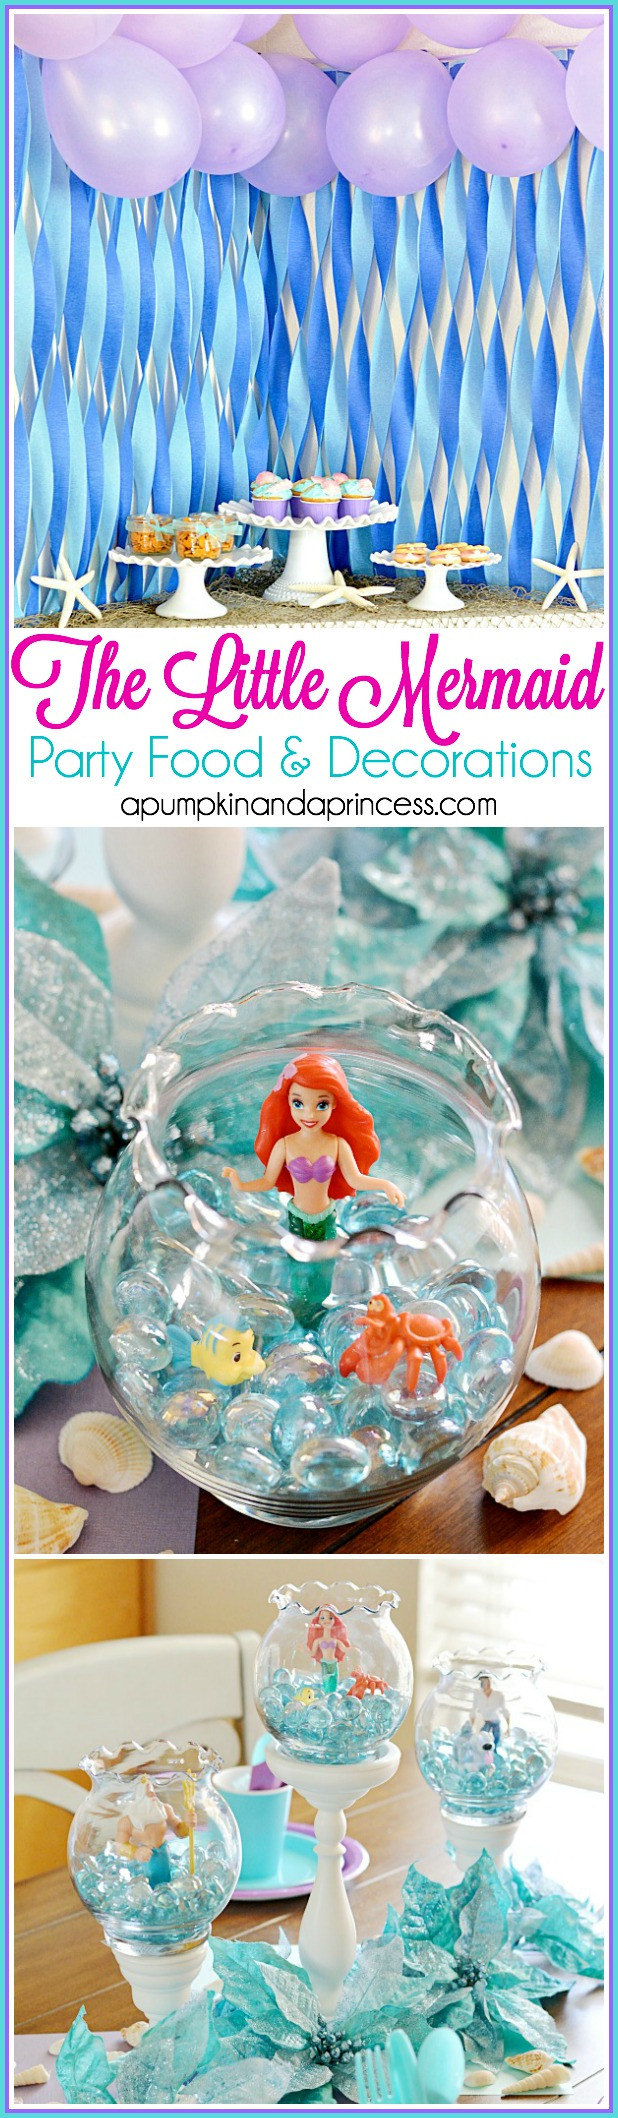 Little Mermaid Theme Party Ideas
 The Little Mermaid Party A Pumpkin And A Princess